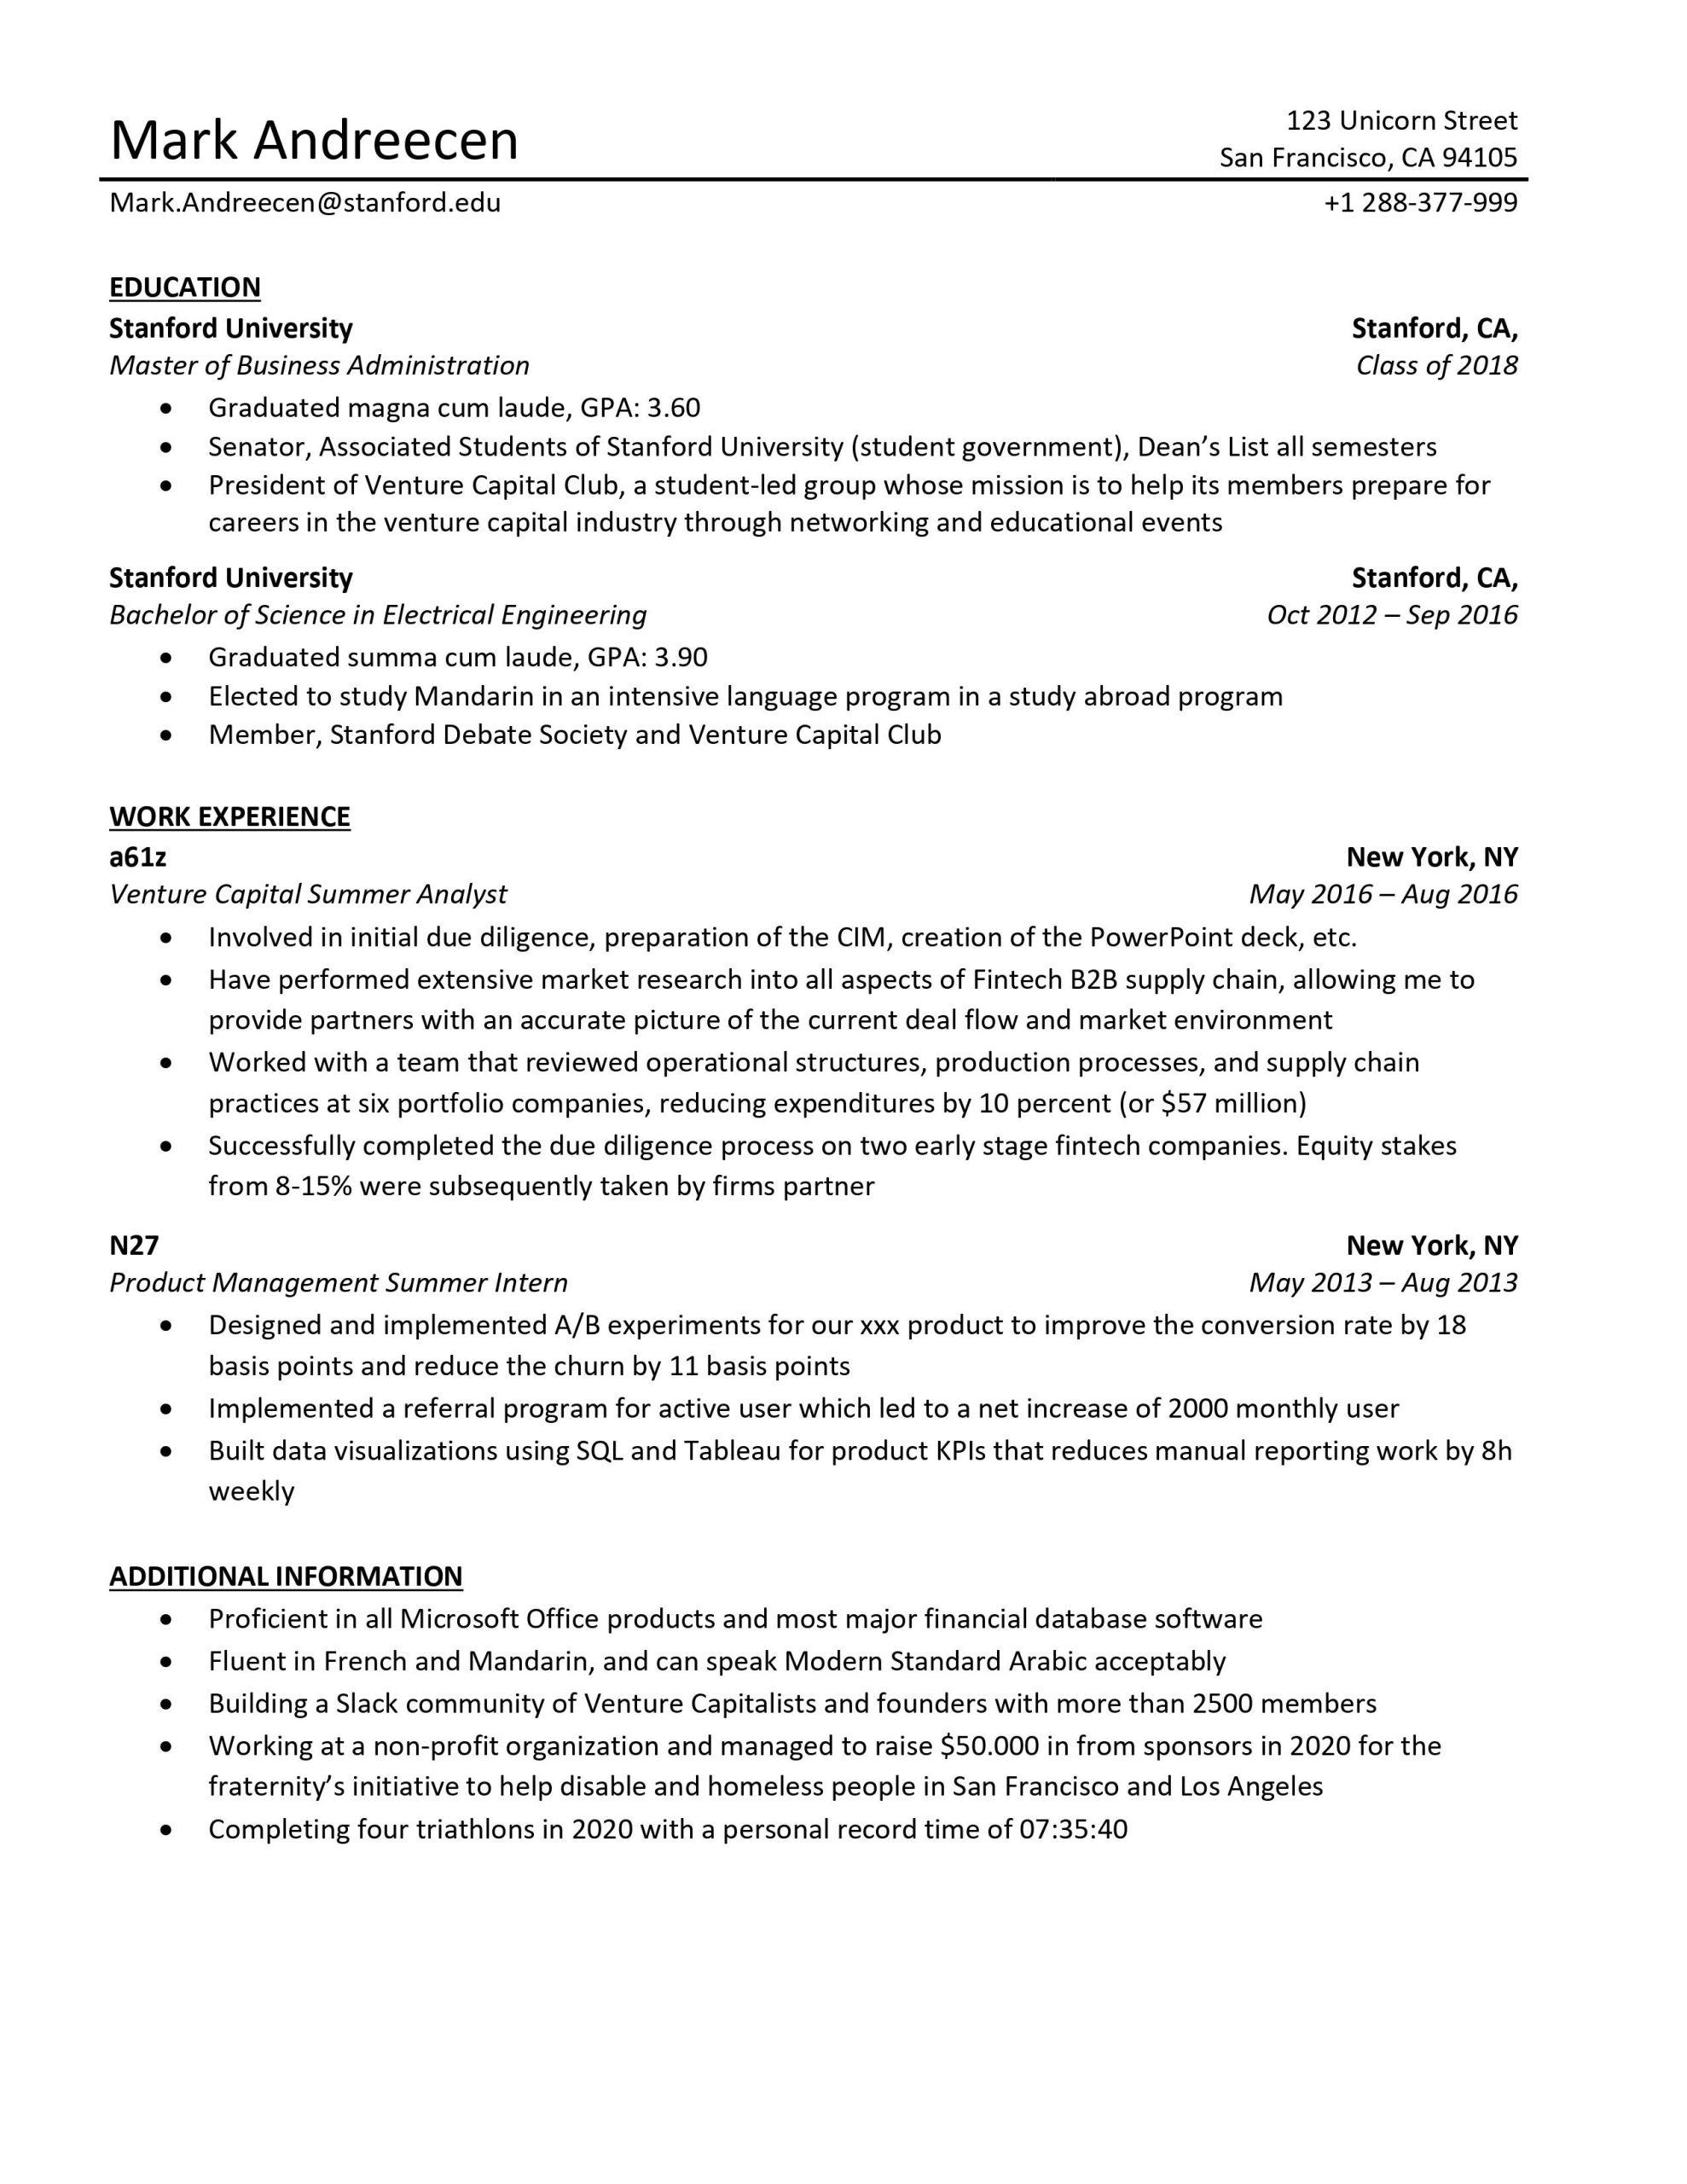 Sample Resume for Venture Capital Analyst Venture Capital Cv Template [free]